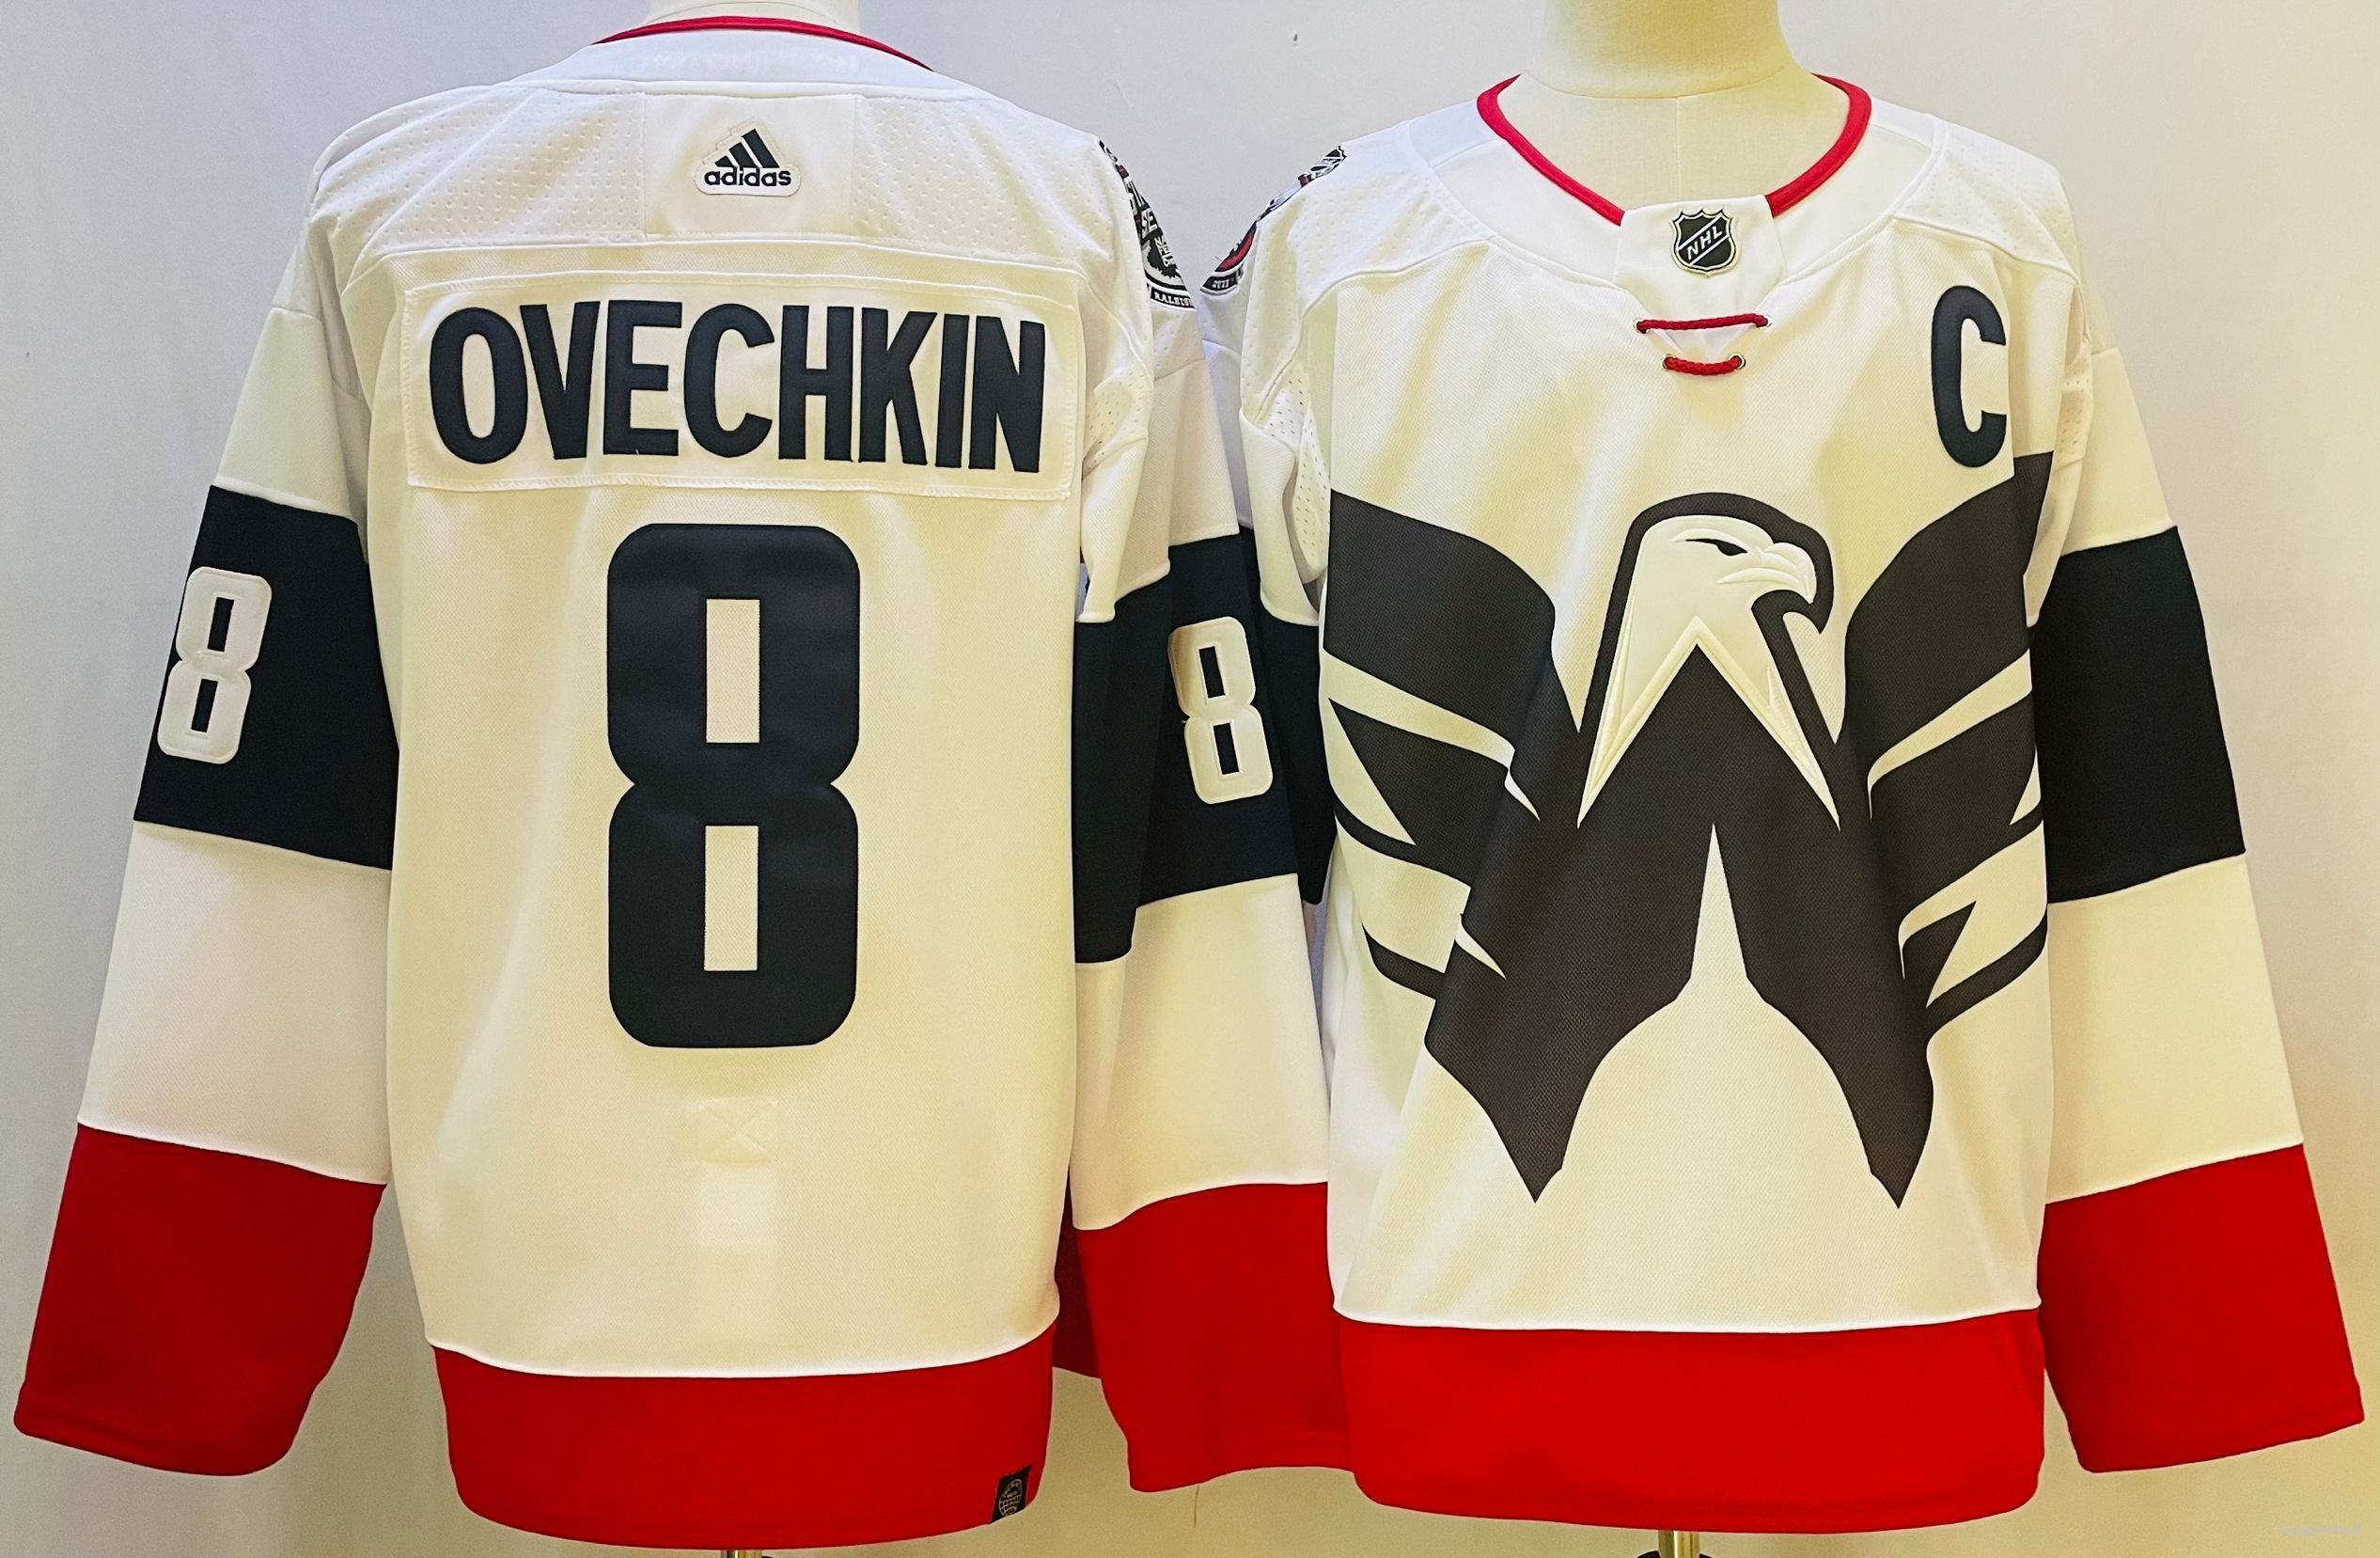 ovechkin retro reverse jersey